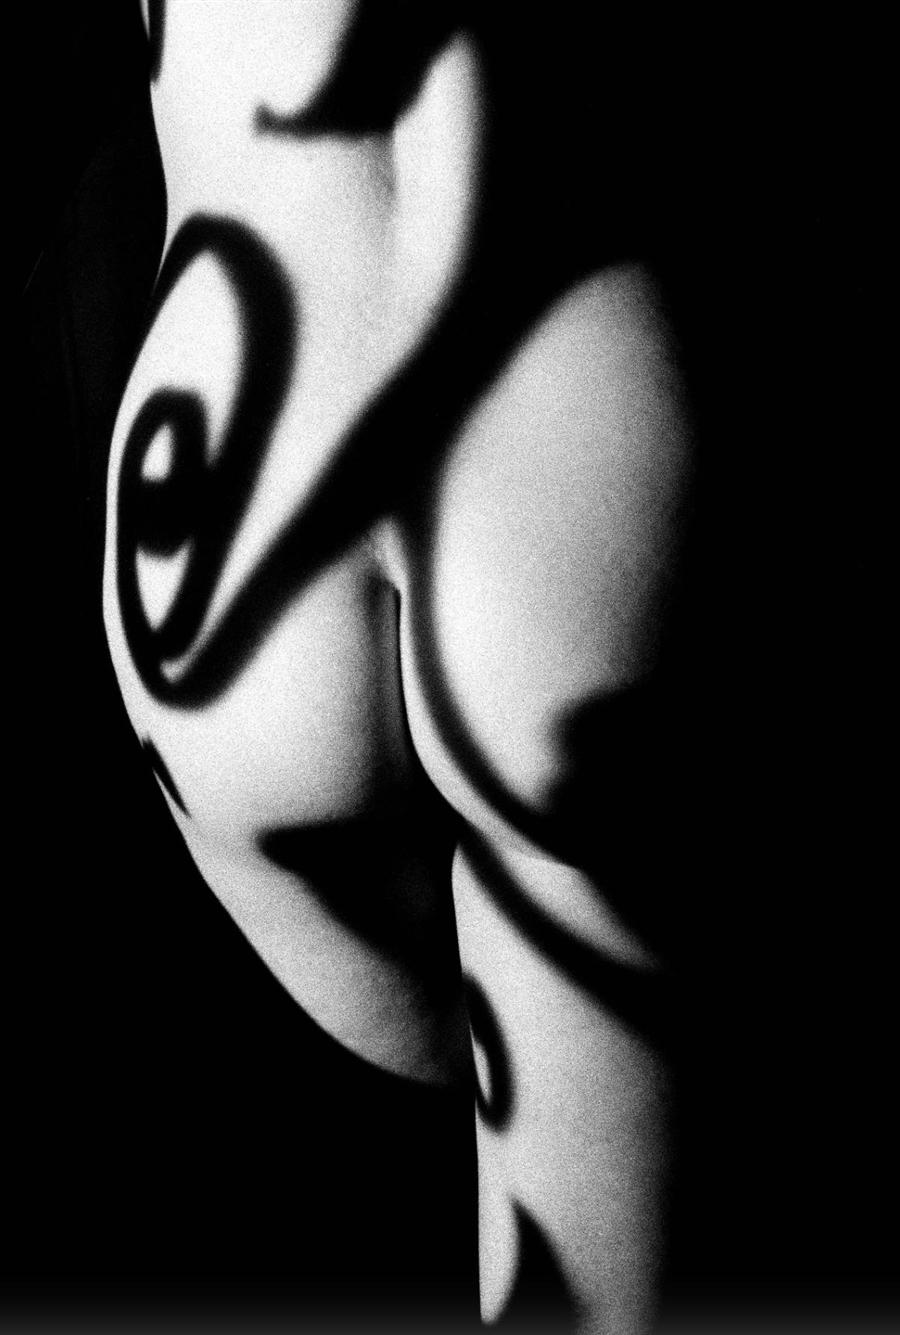 Black and White Photograph Robert Farber - L'ombre du cul